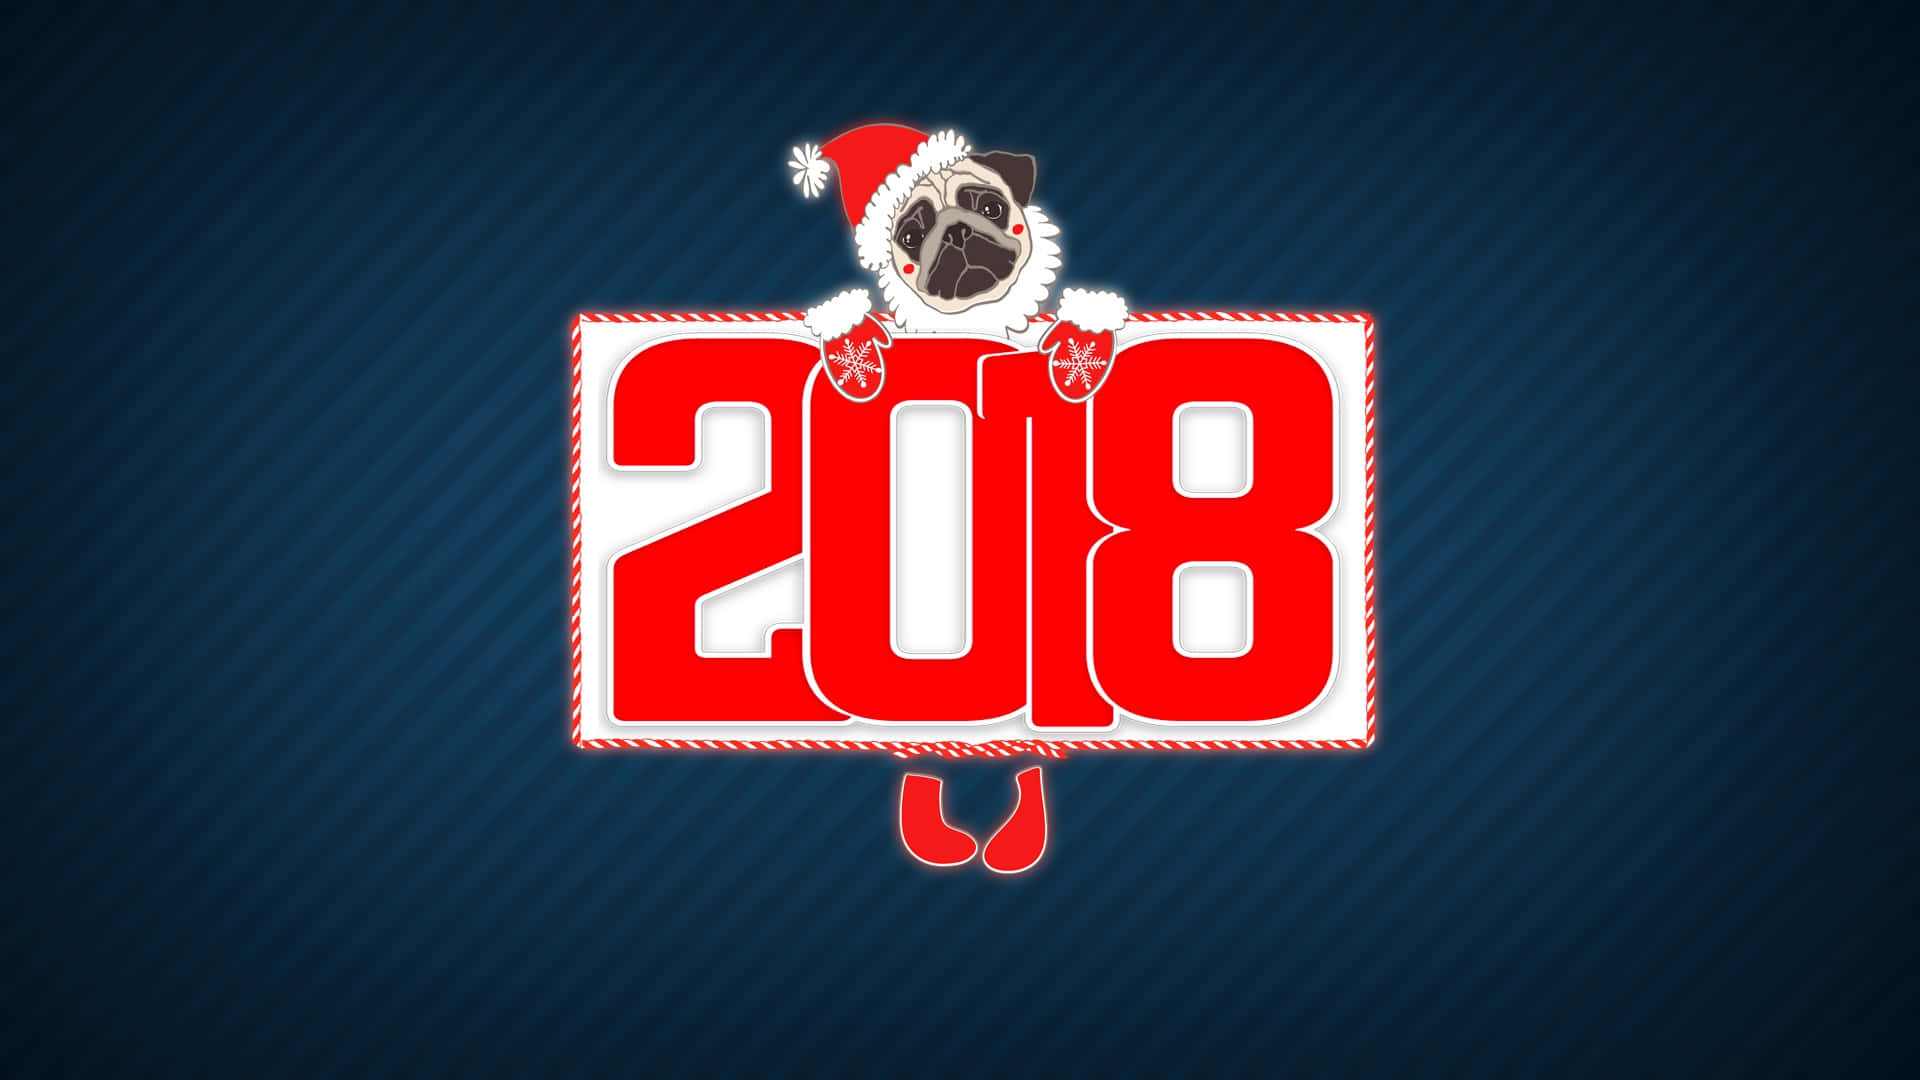 2018 Cute Dog Wallpaper